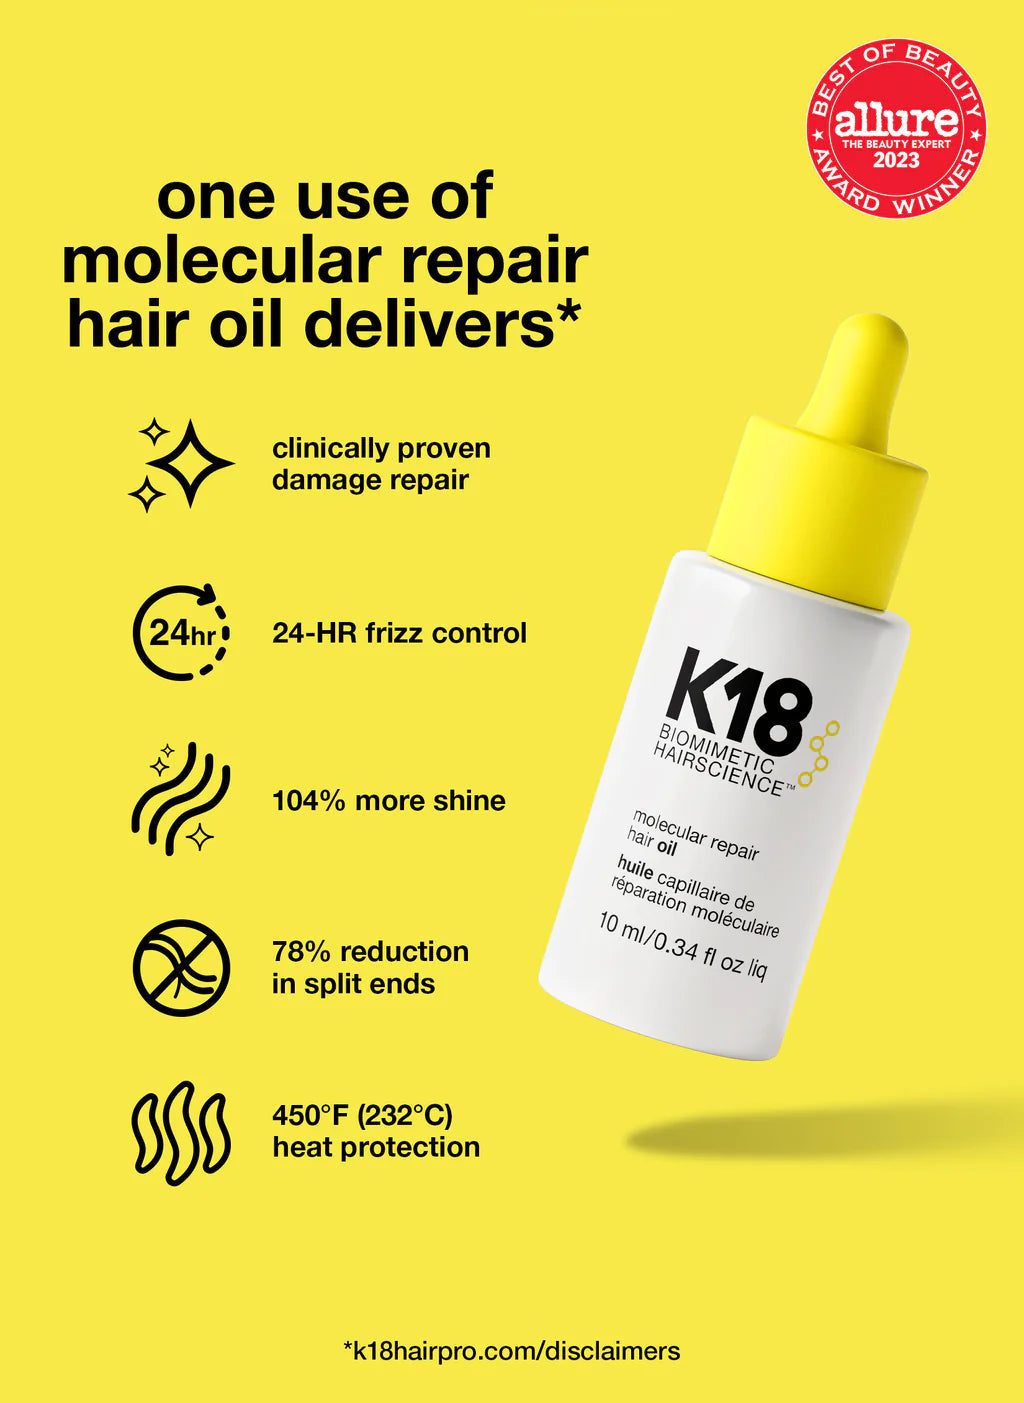 K18 Biomimetic Hairscience Next-Level Repair Trio